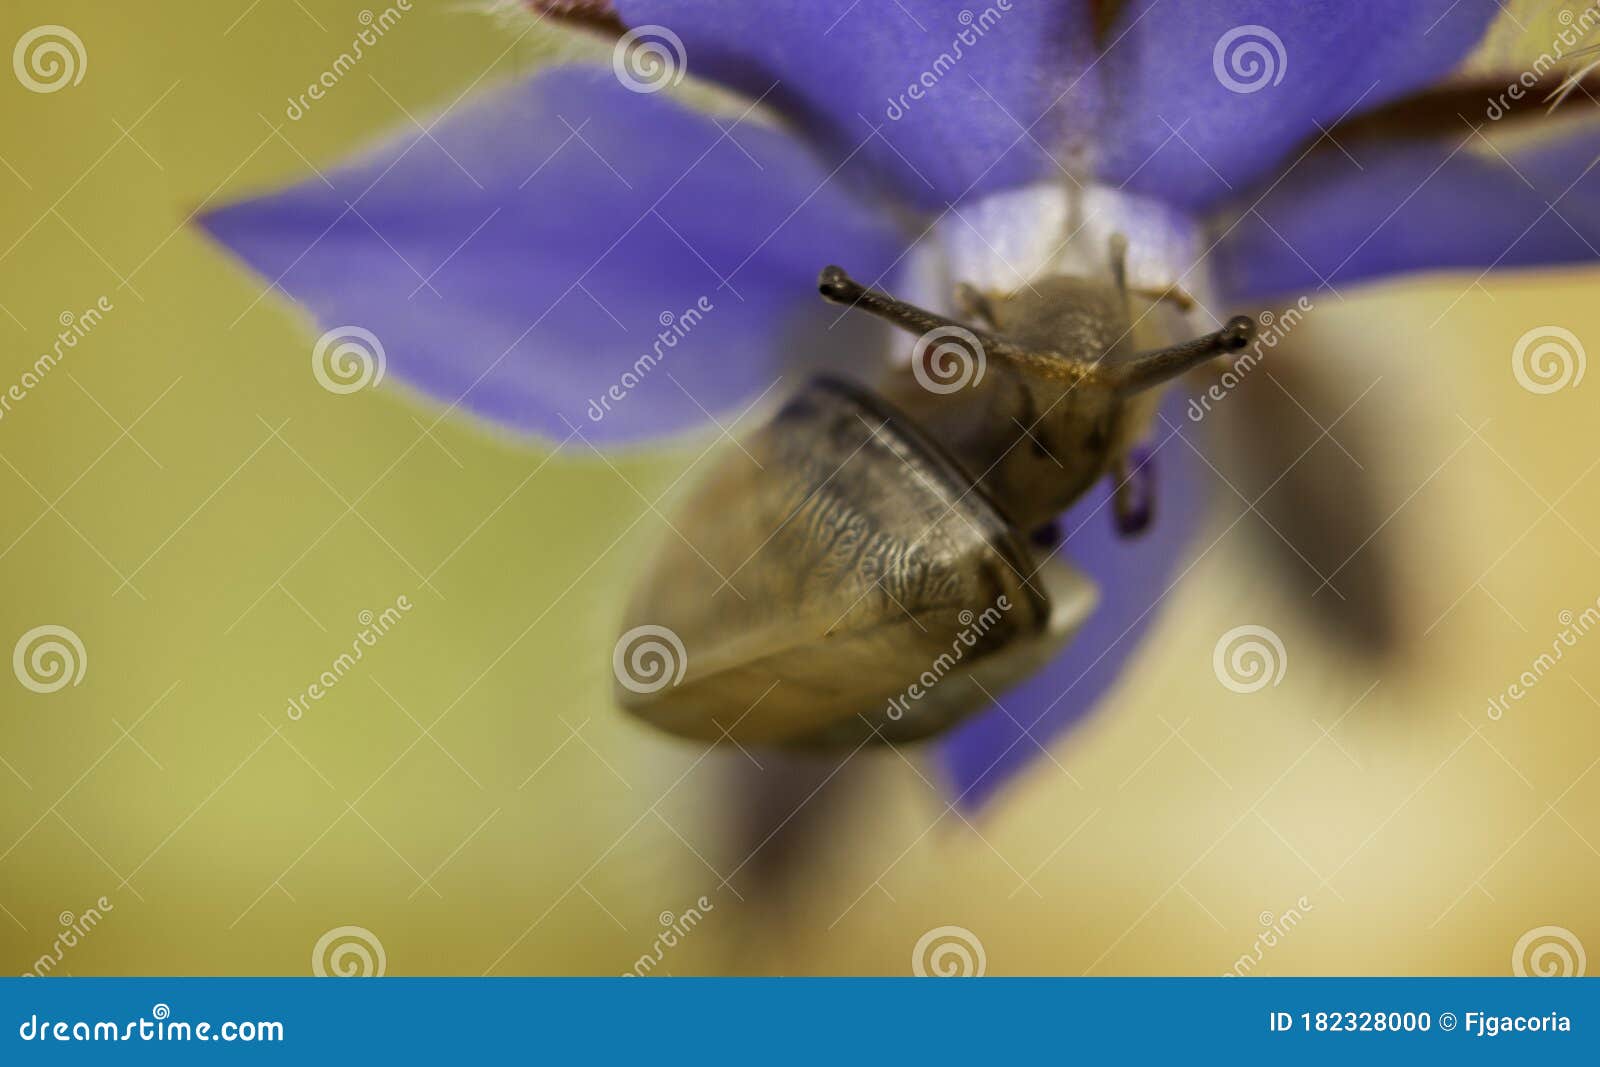 snail climbing up flower looking